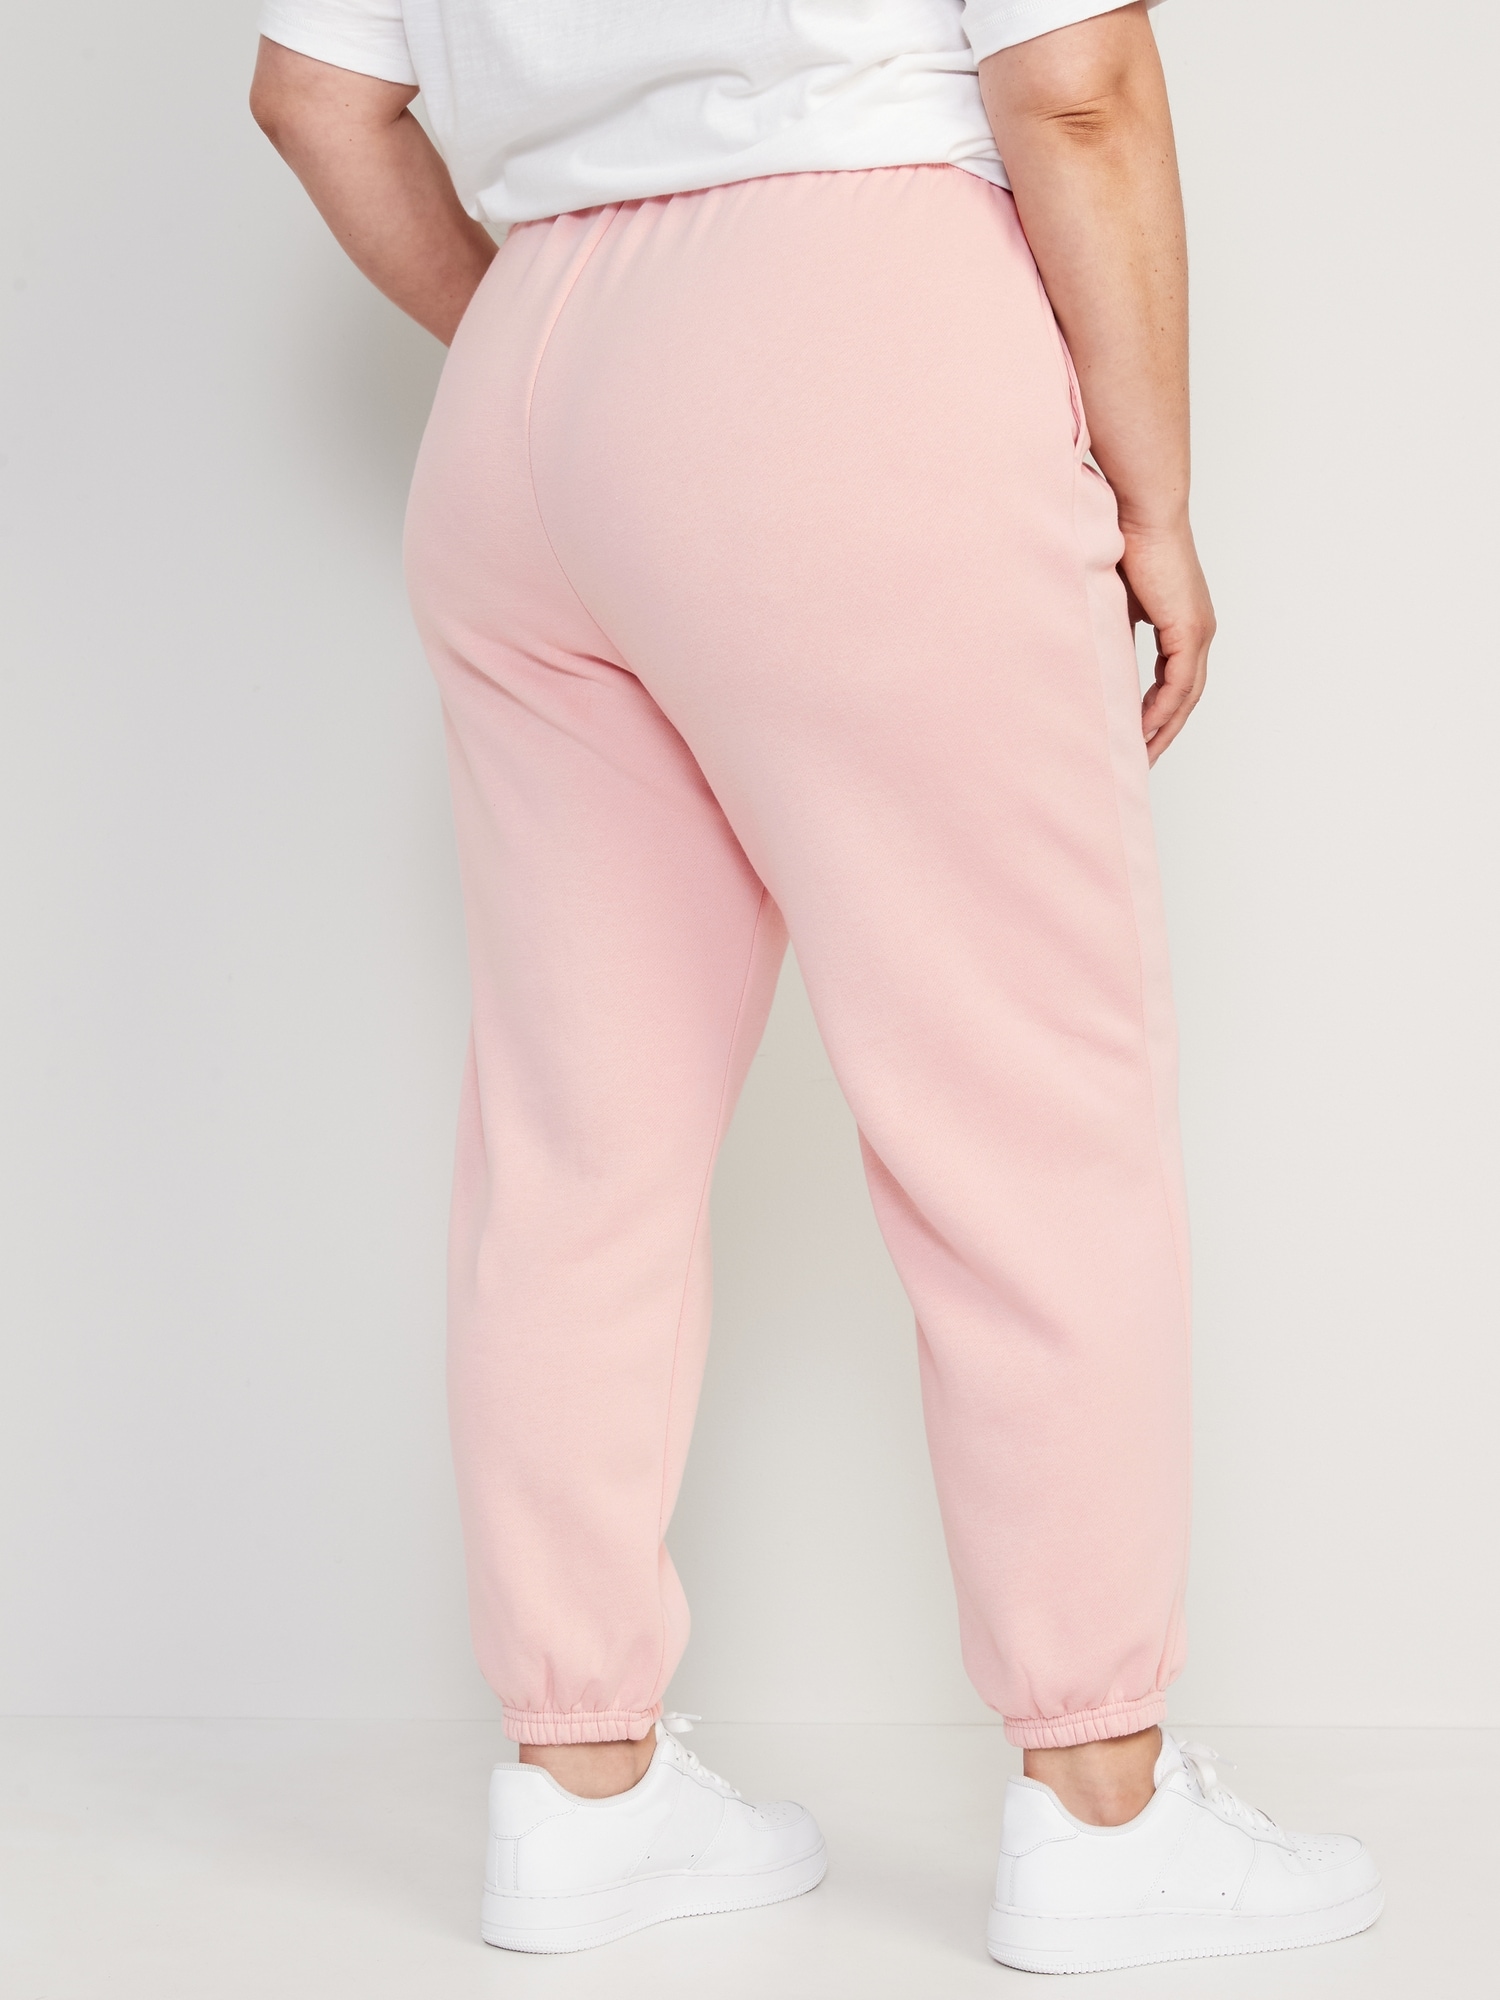 Women Solid Color Pants Adjustable Drawstring Joggers Sweatpants Basic Plus  Size Trousers (3X-Large, Pink)